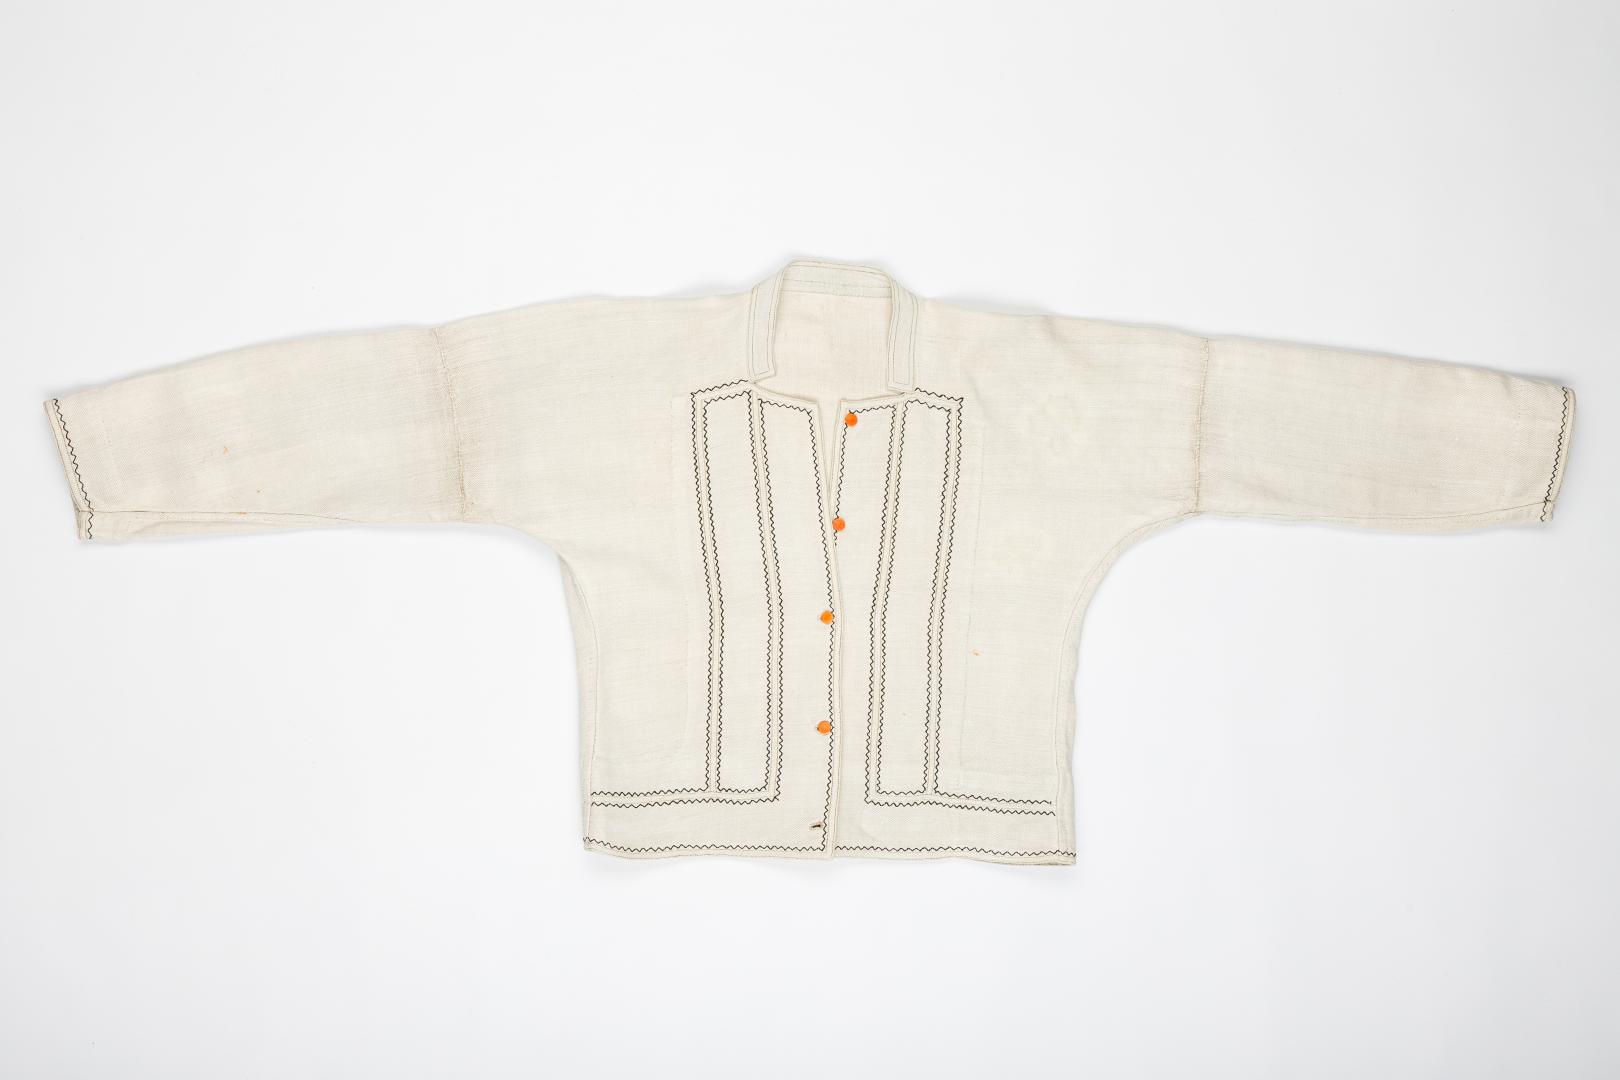 Embroidered kabat (jacket)